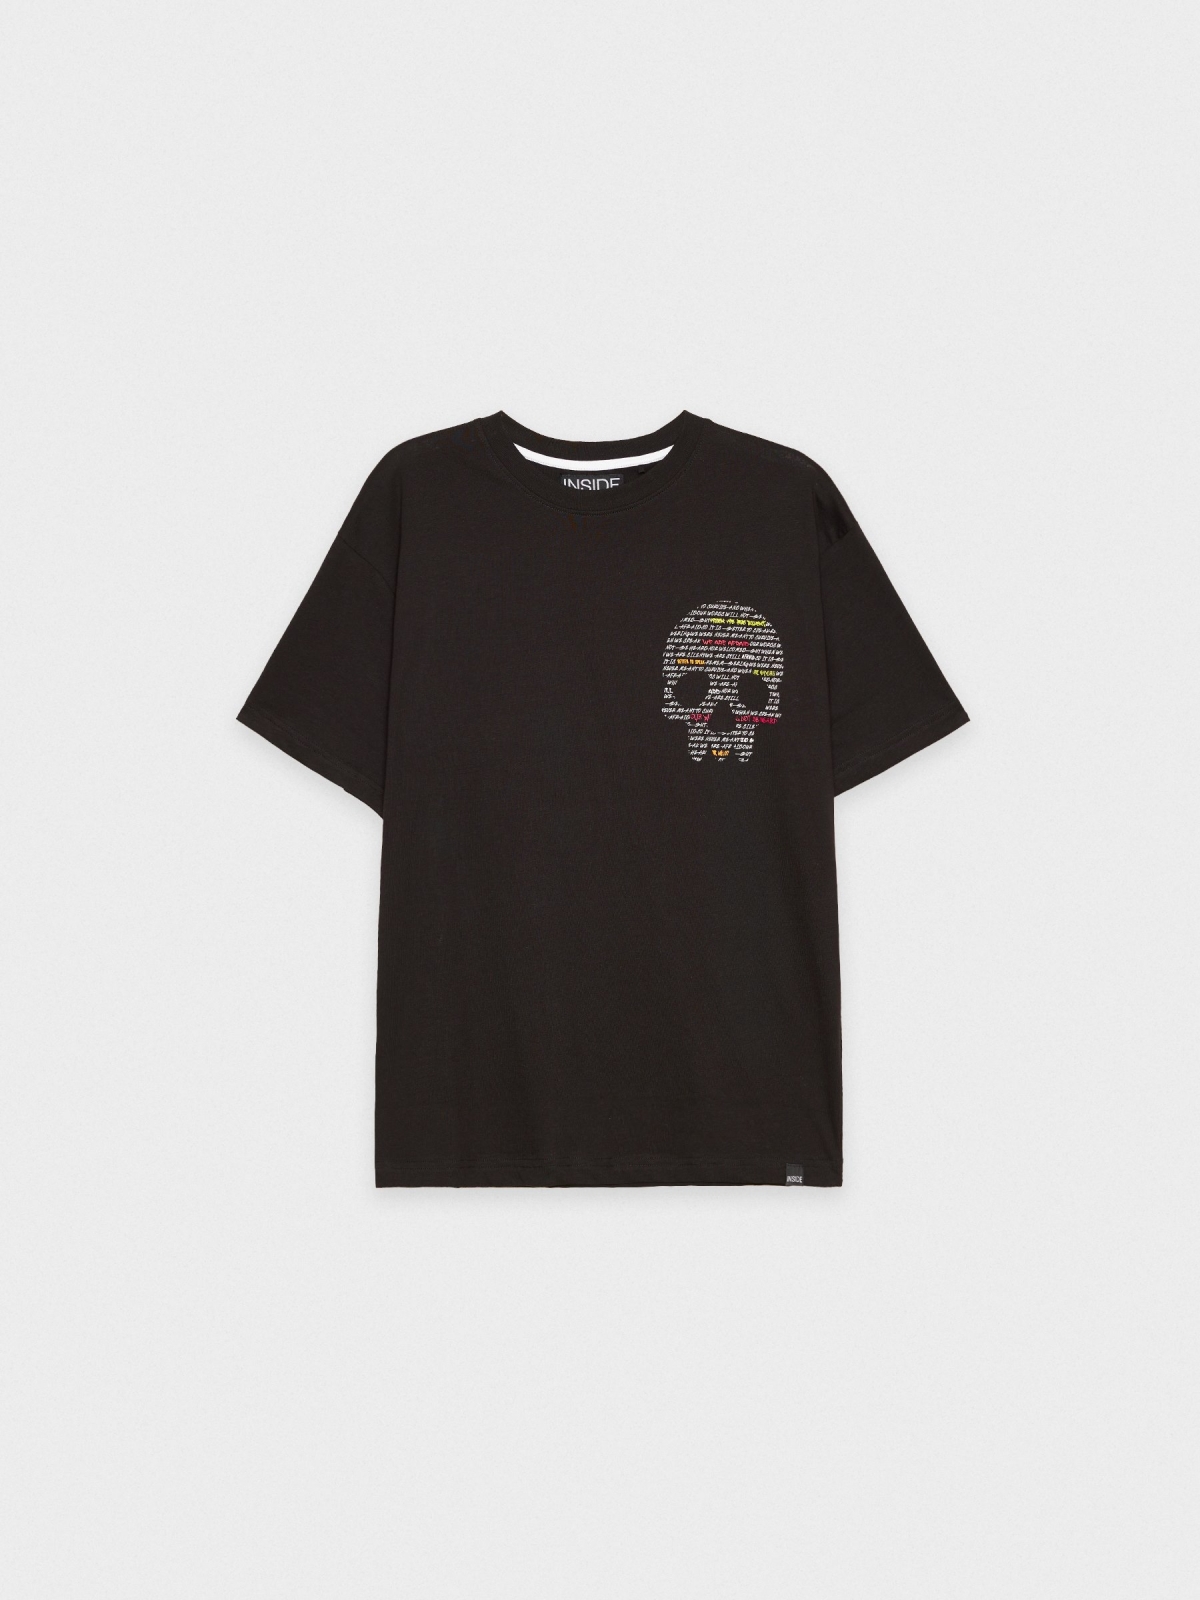  Camiseta calavera texto oversize negro